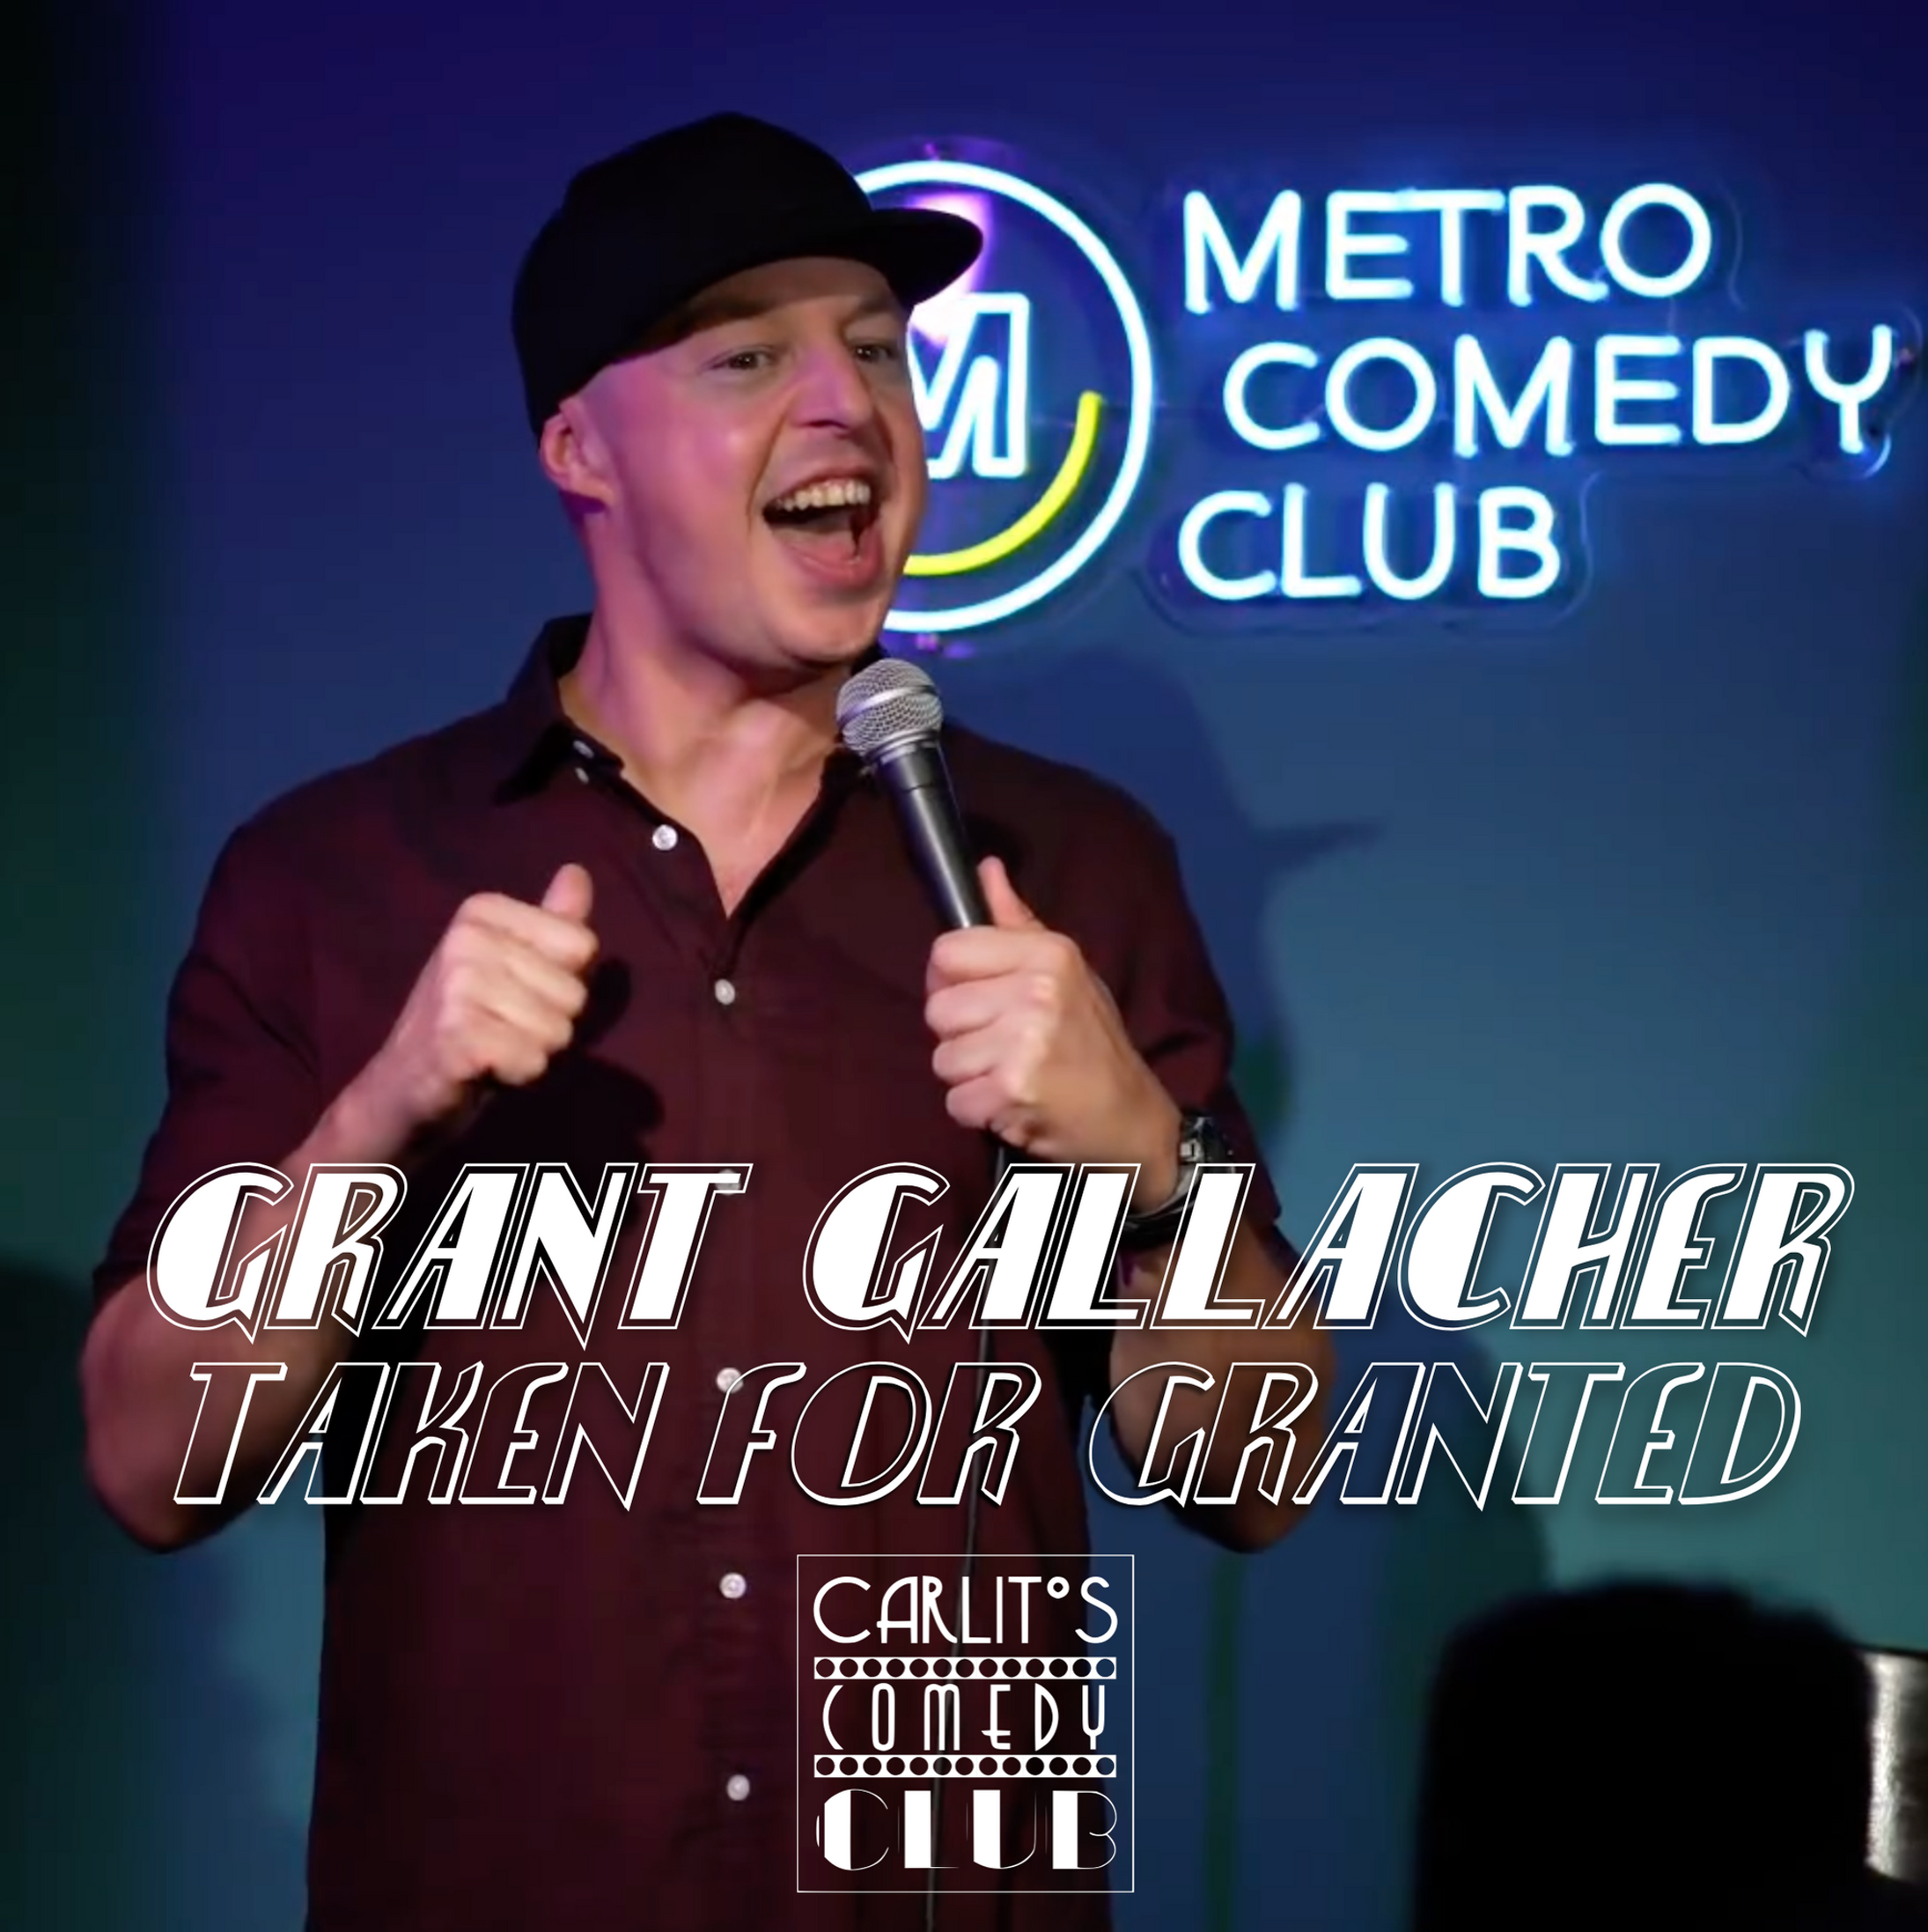 Grant Gallacher - Taken For granted